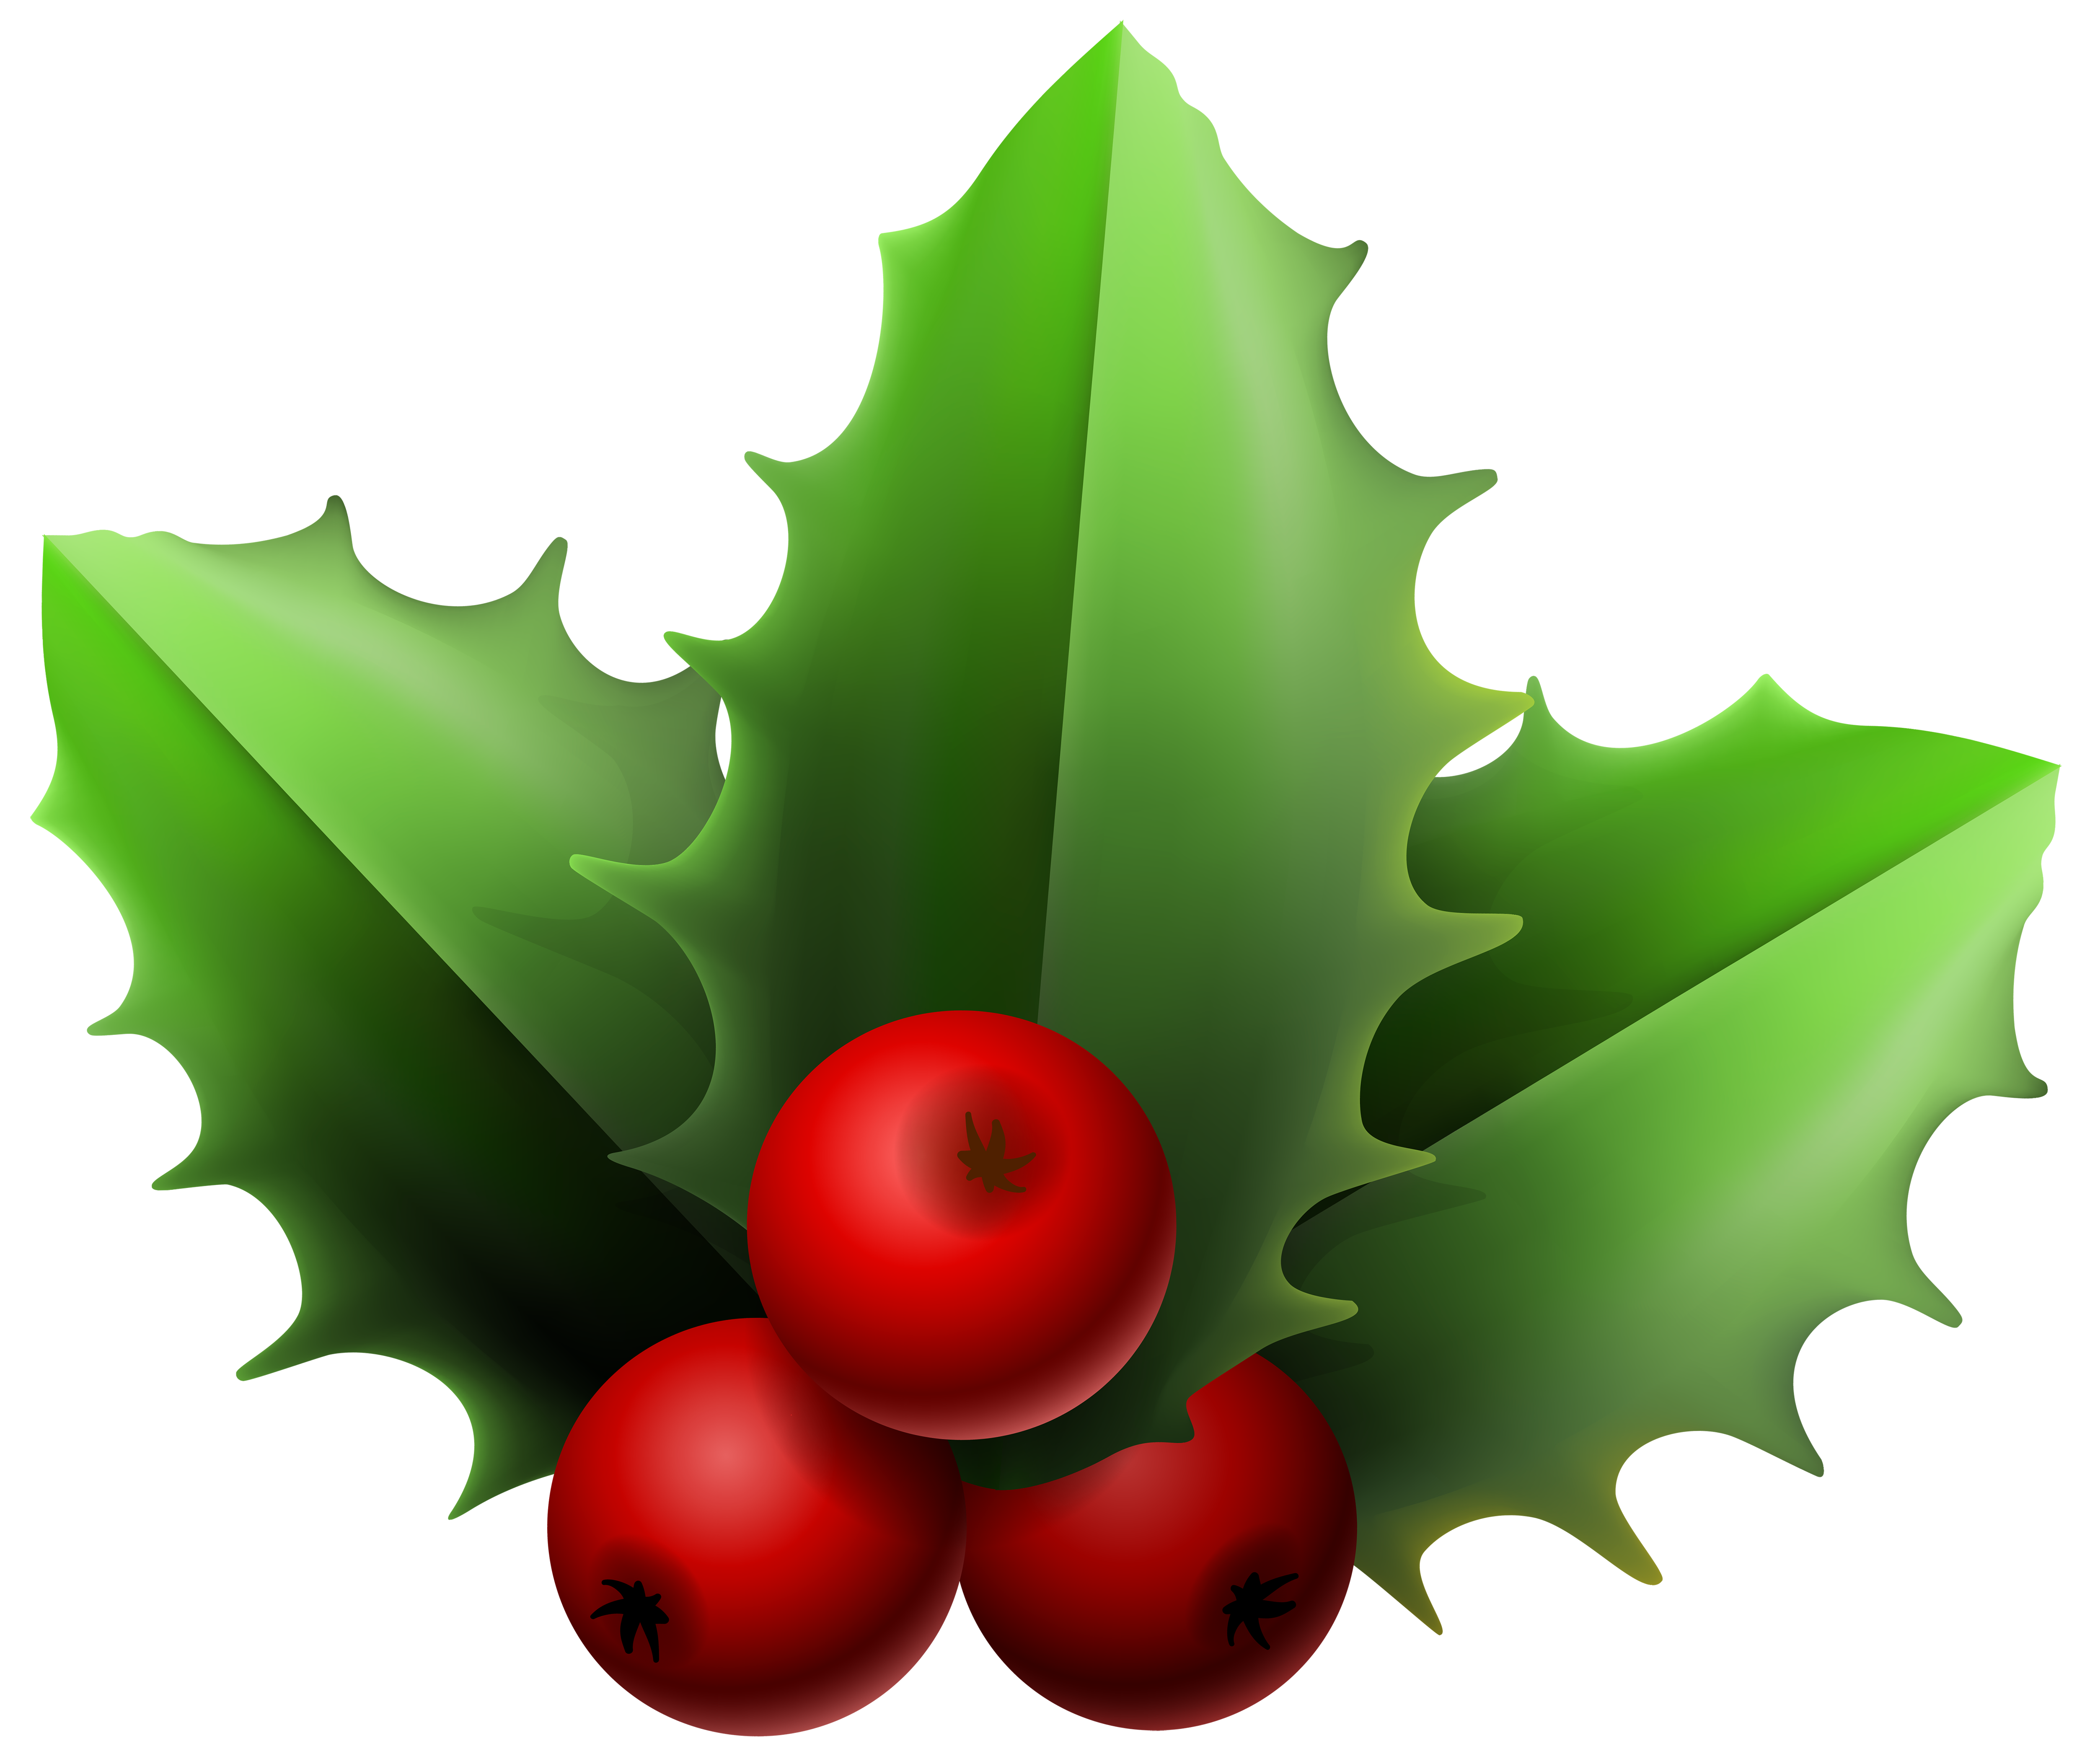 Mistletoe Clip art - Christmas Mistletoe PNG Clipart Image png download ...